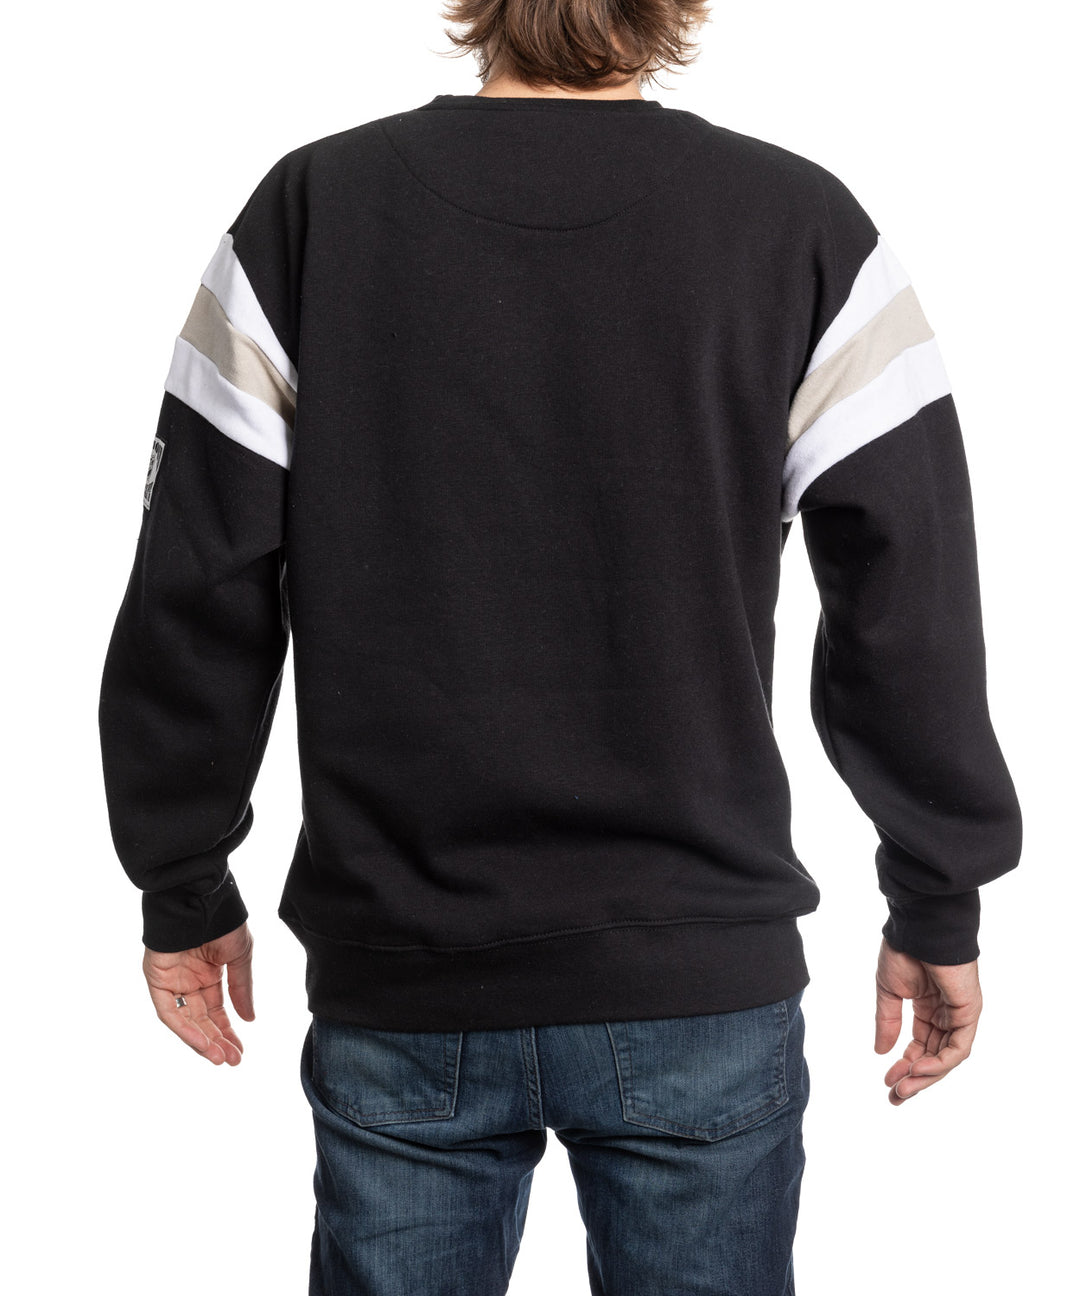 Vegas Golden Knights Varsity Retro Style Crewneck Sweater